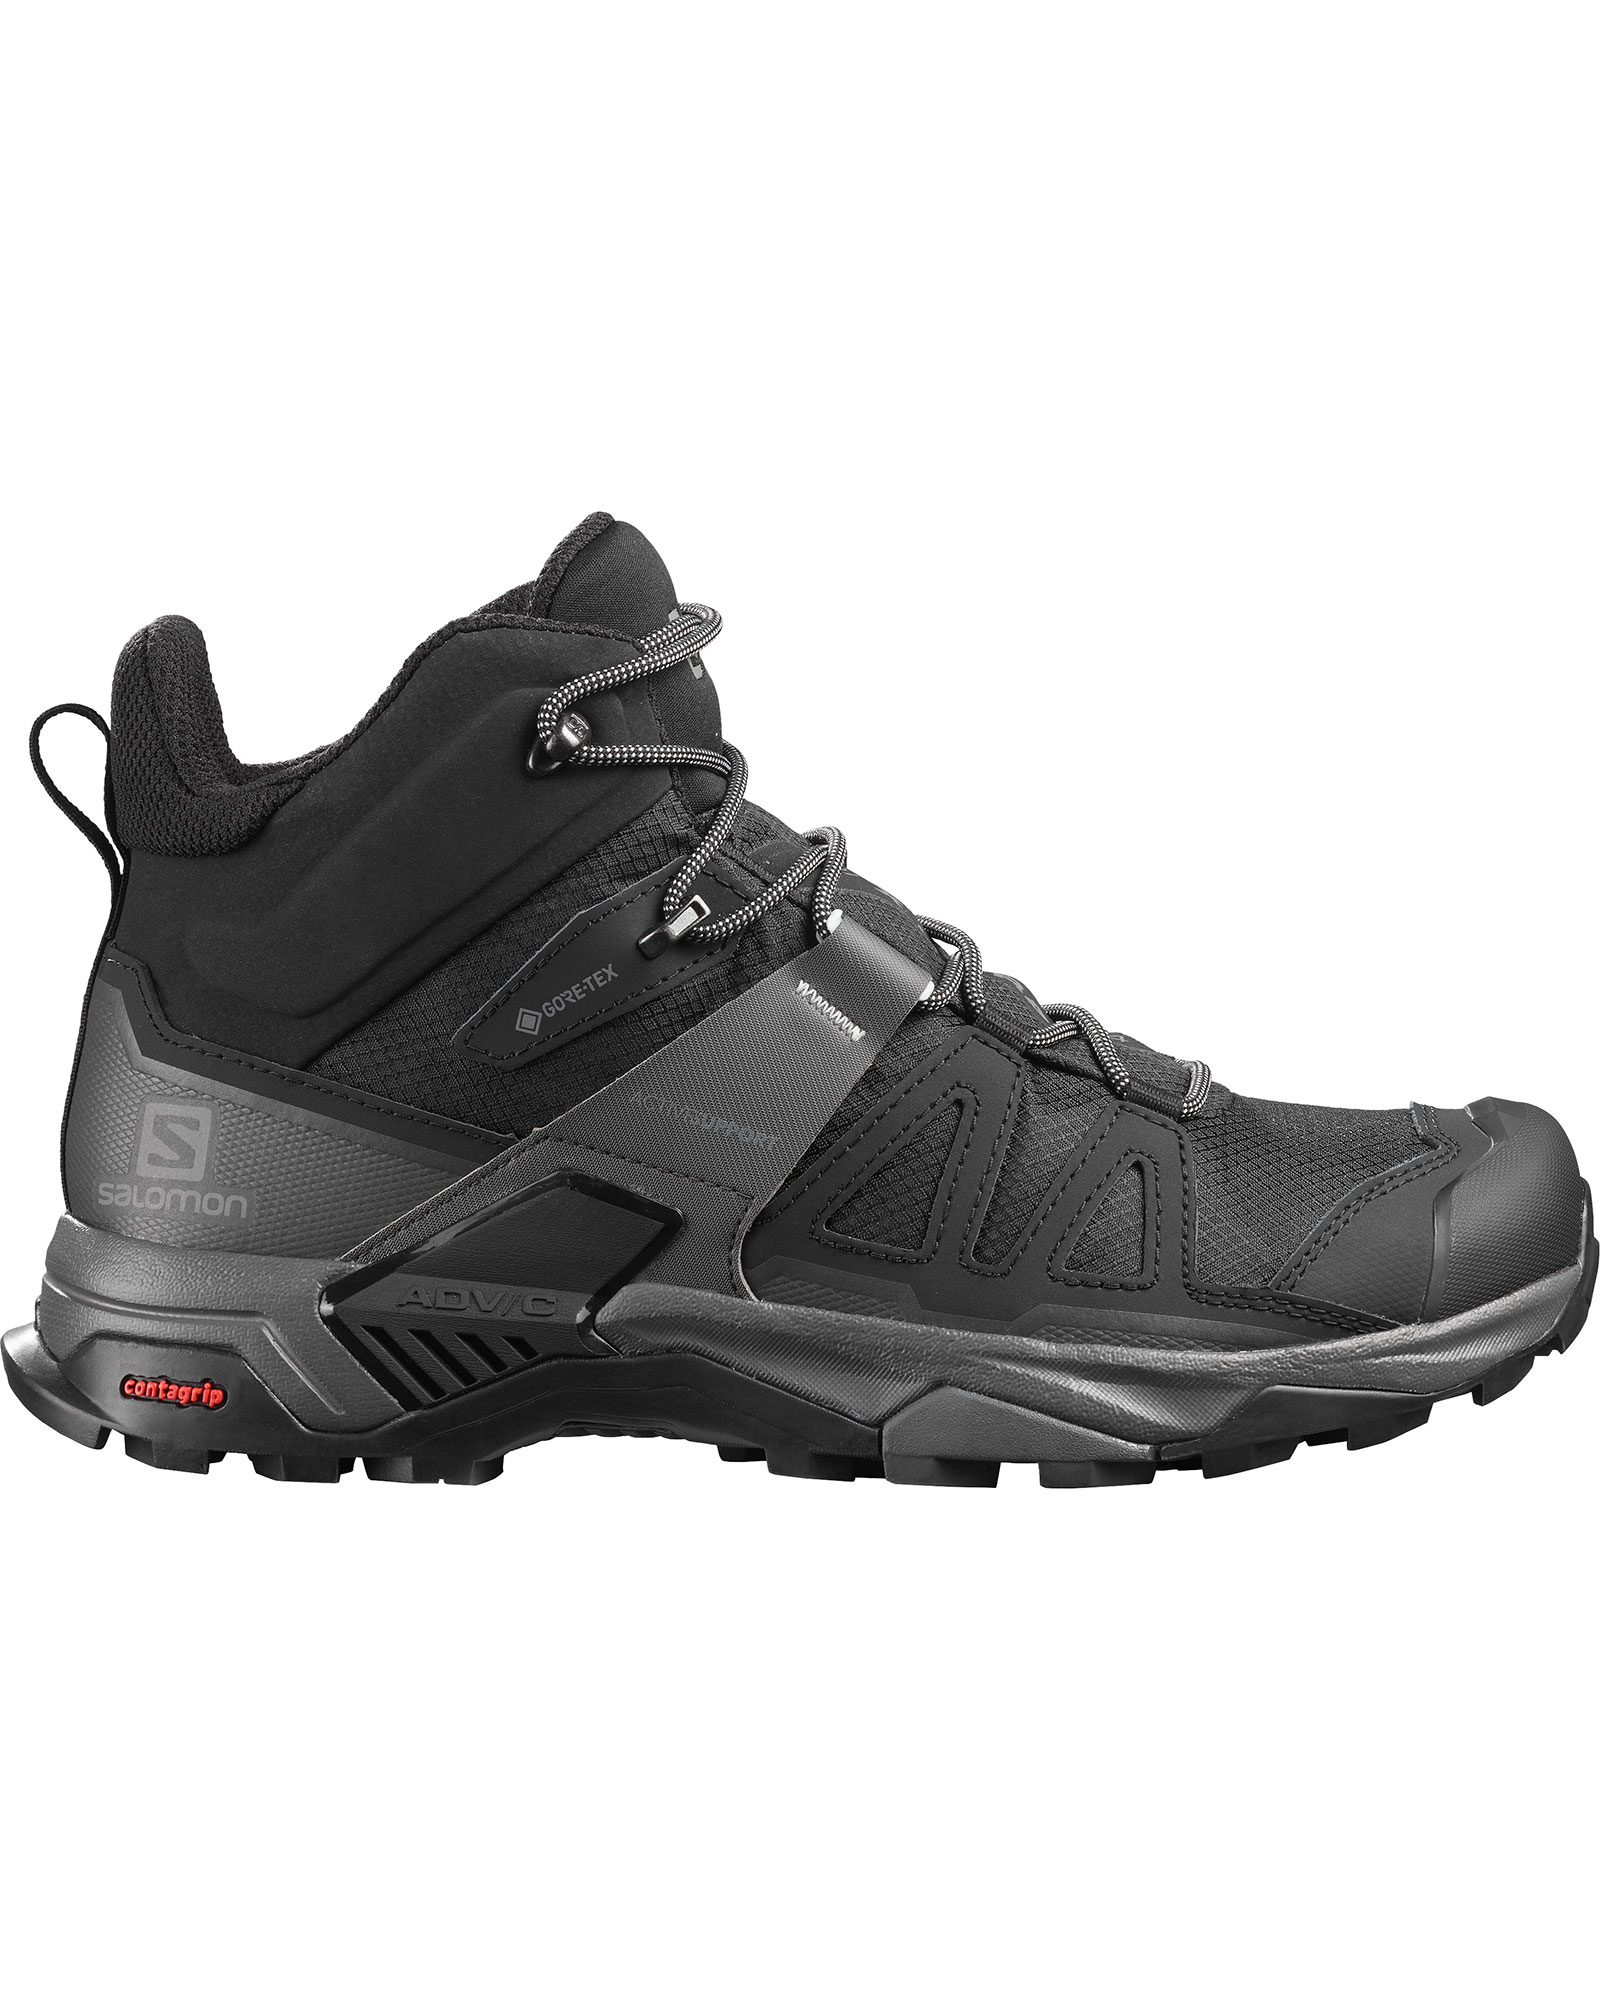 Salomon X Ultra 4 Mid GORE TEX Men’s Boots - Black/Magnet/Pearl Blue UK 12